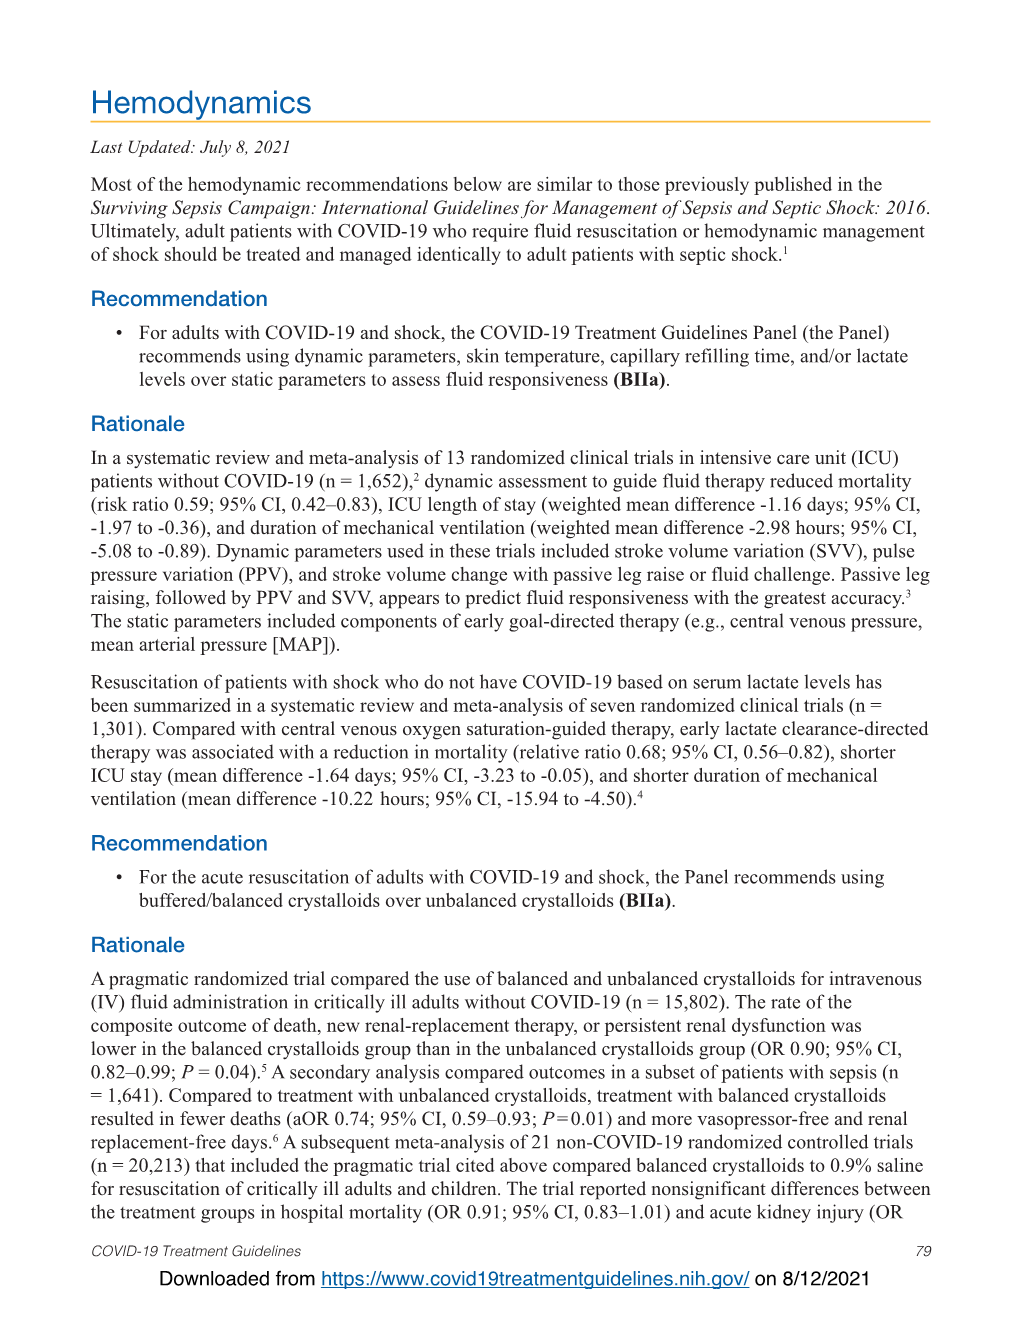 Coronavirus Disease 2019 (COVID-19) Treatment Guidelines